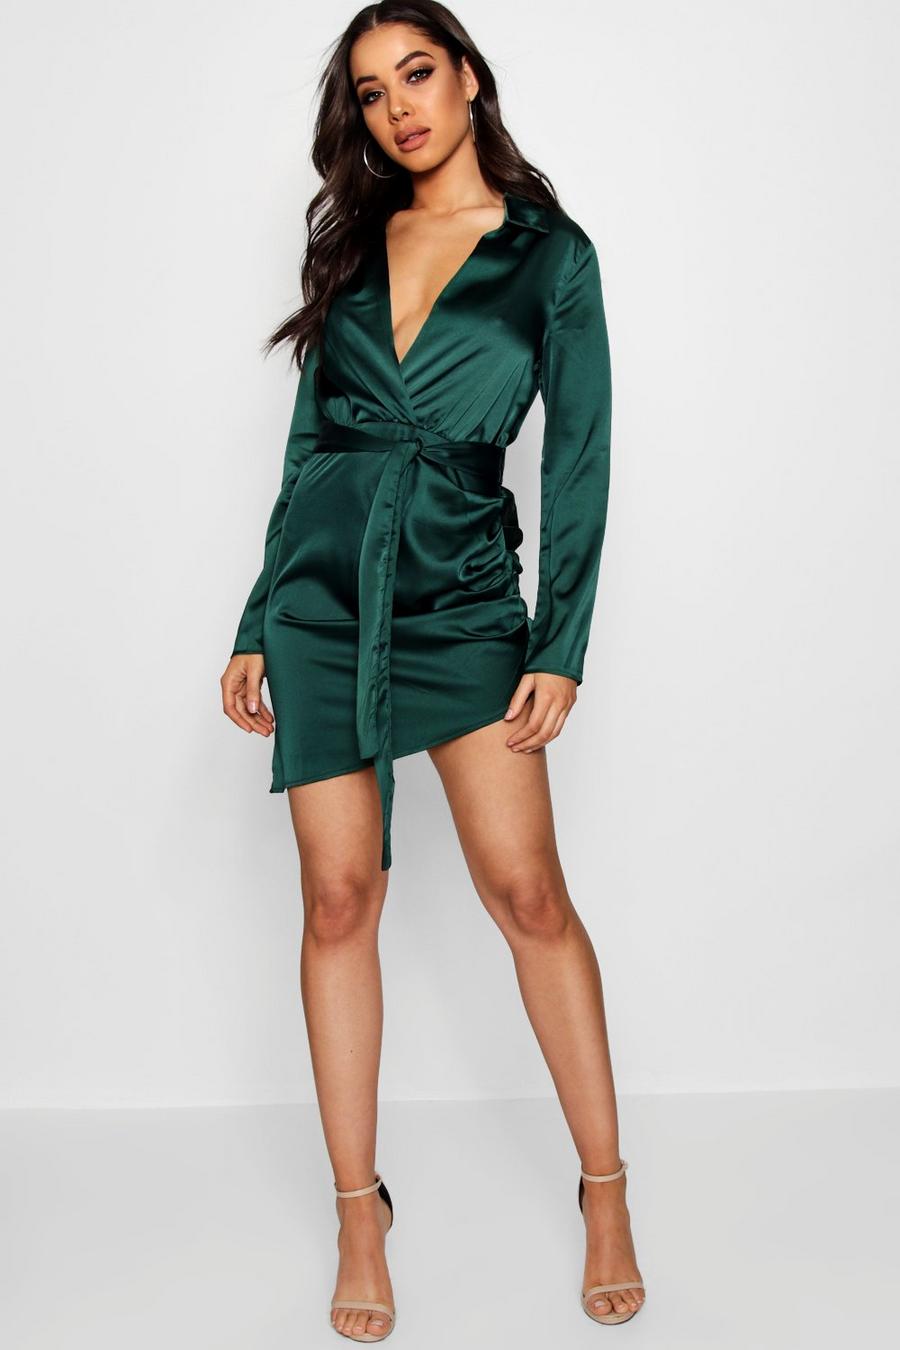 Emerald gerde Satin Wrap Detail Dress